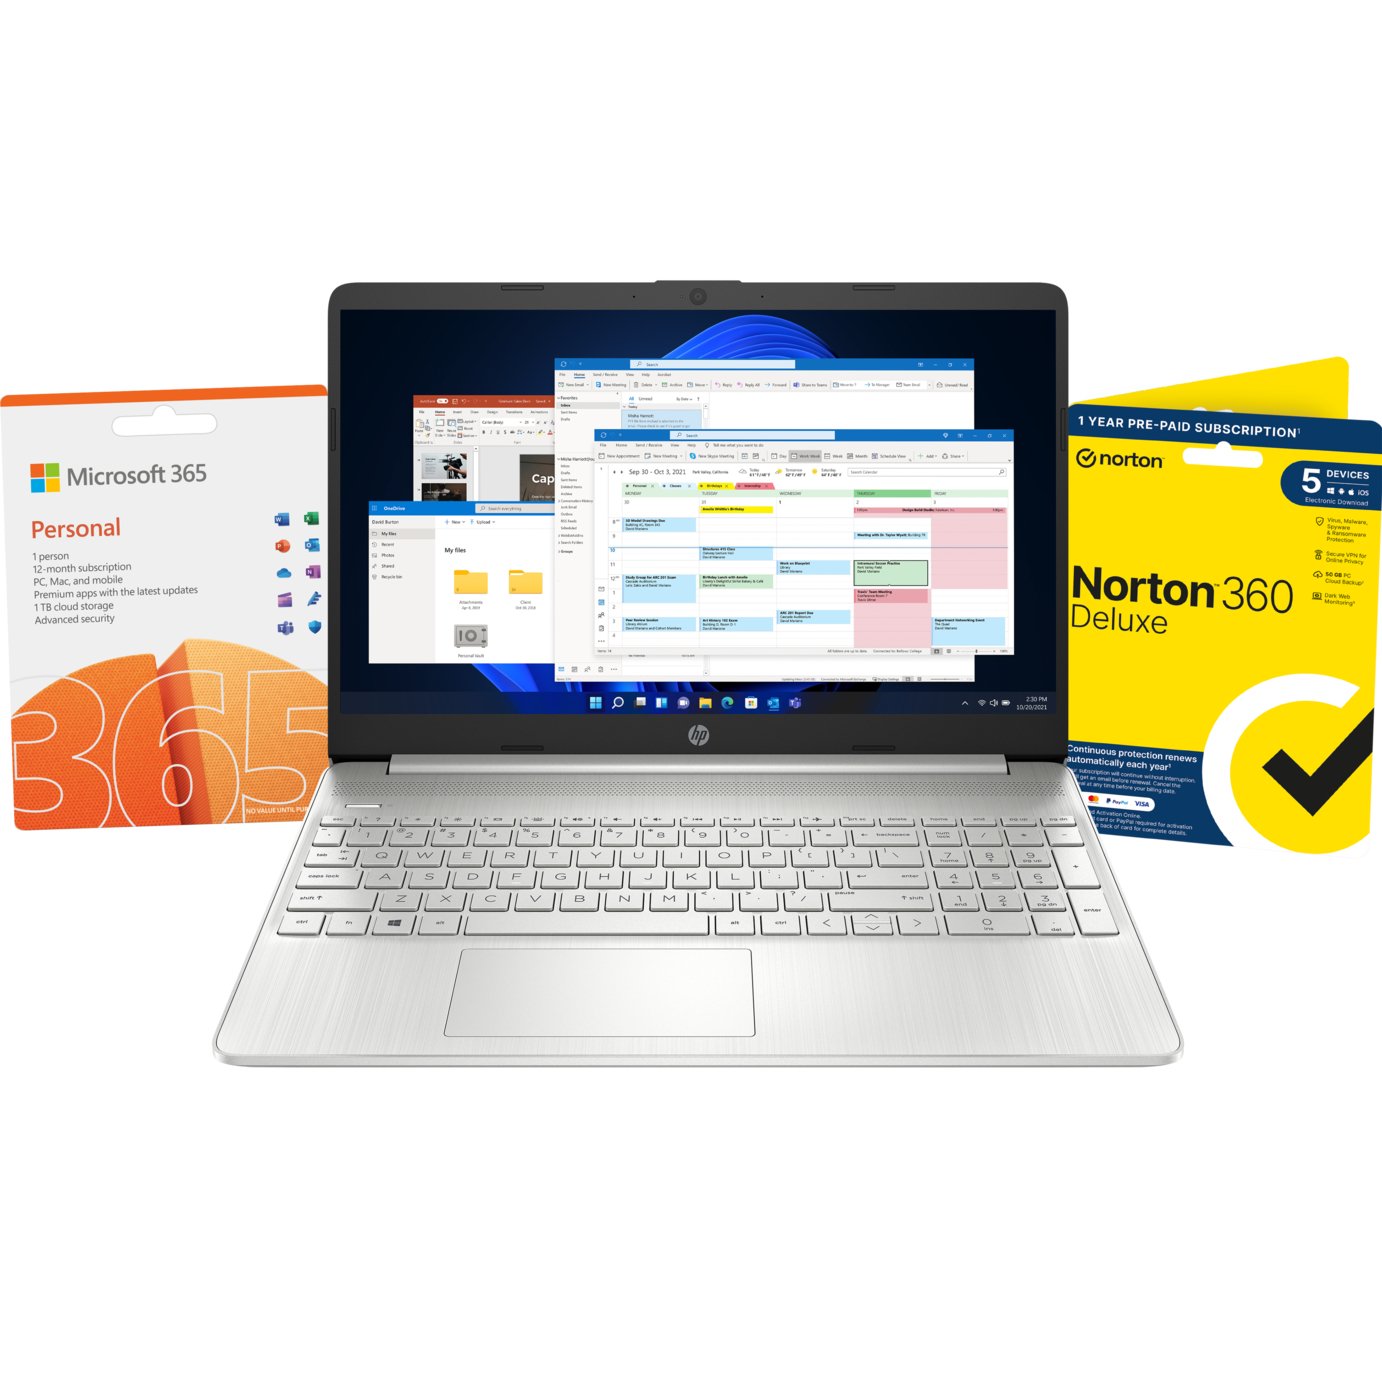 HP 15.6in i3 4GB 128GB Laptop -Silver   Microsoft 365 Bundle